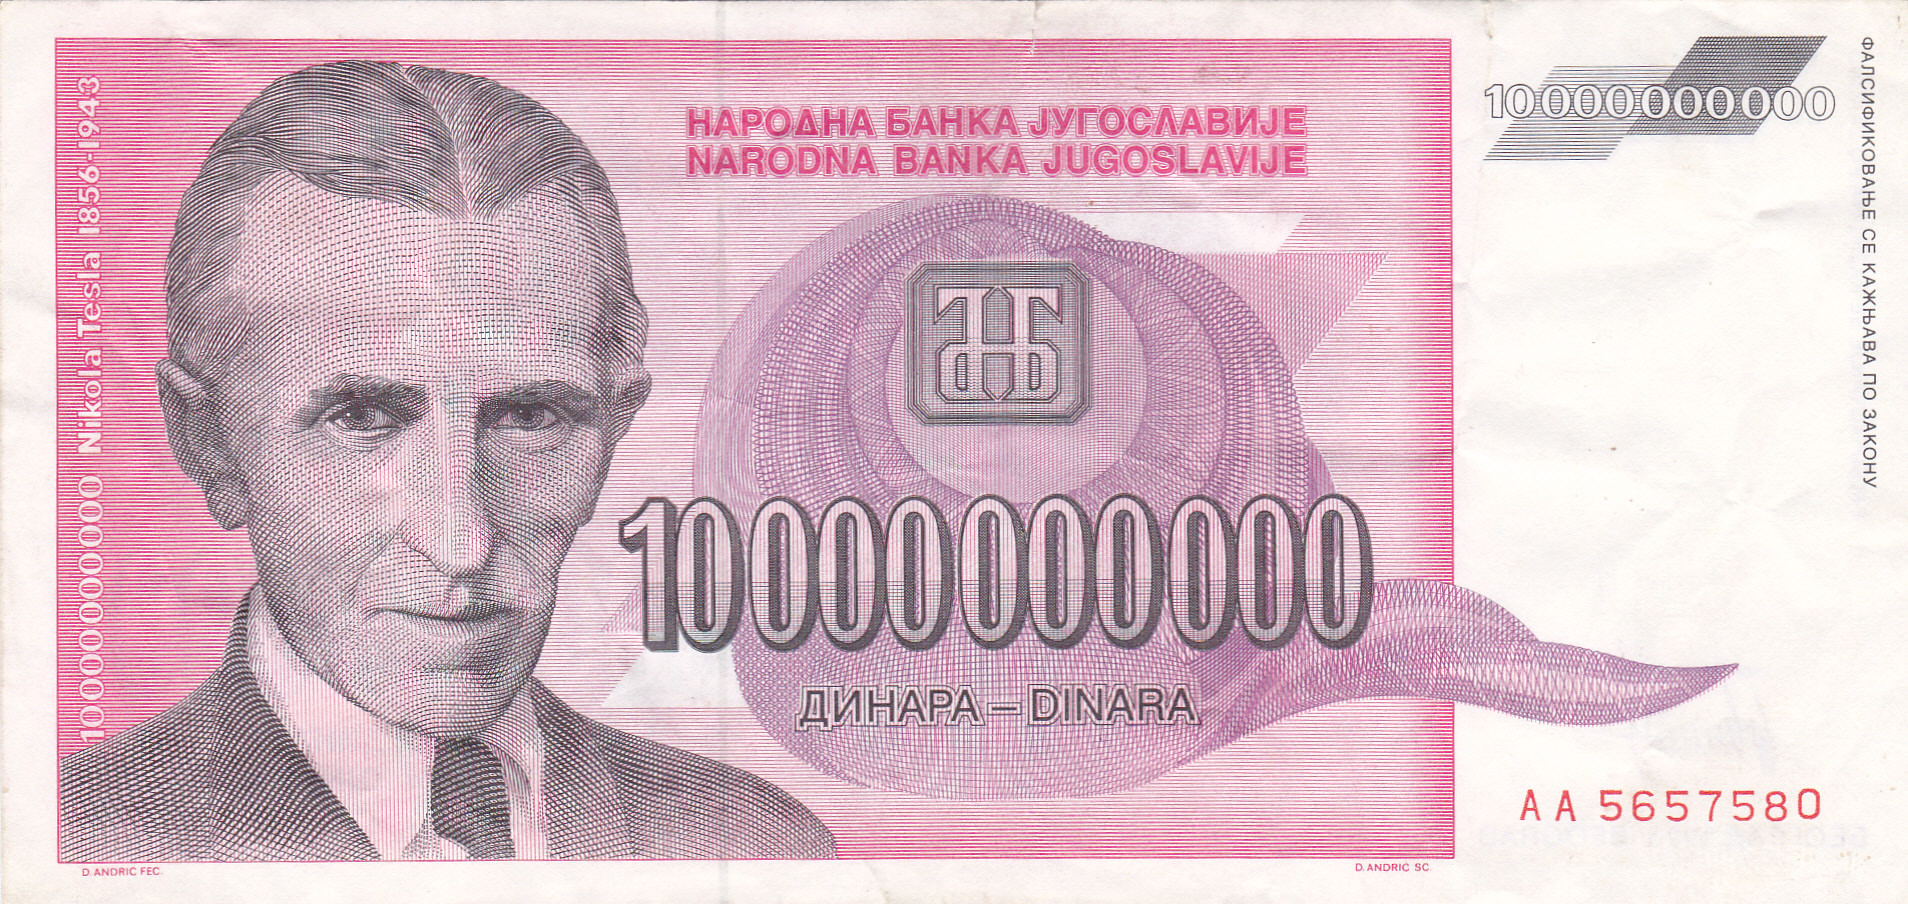 Yugoslav Dinar HD wallpapers, Desktop wallpaper - most viewed